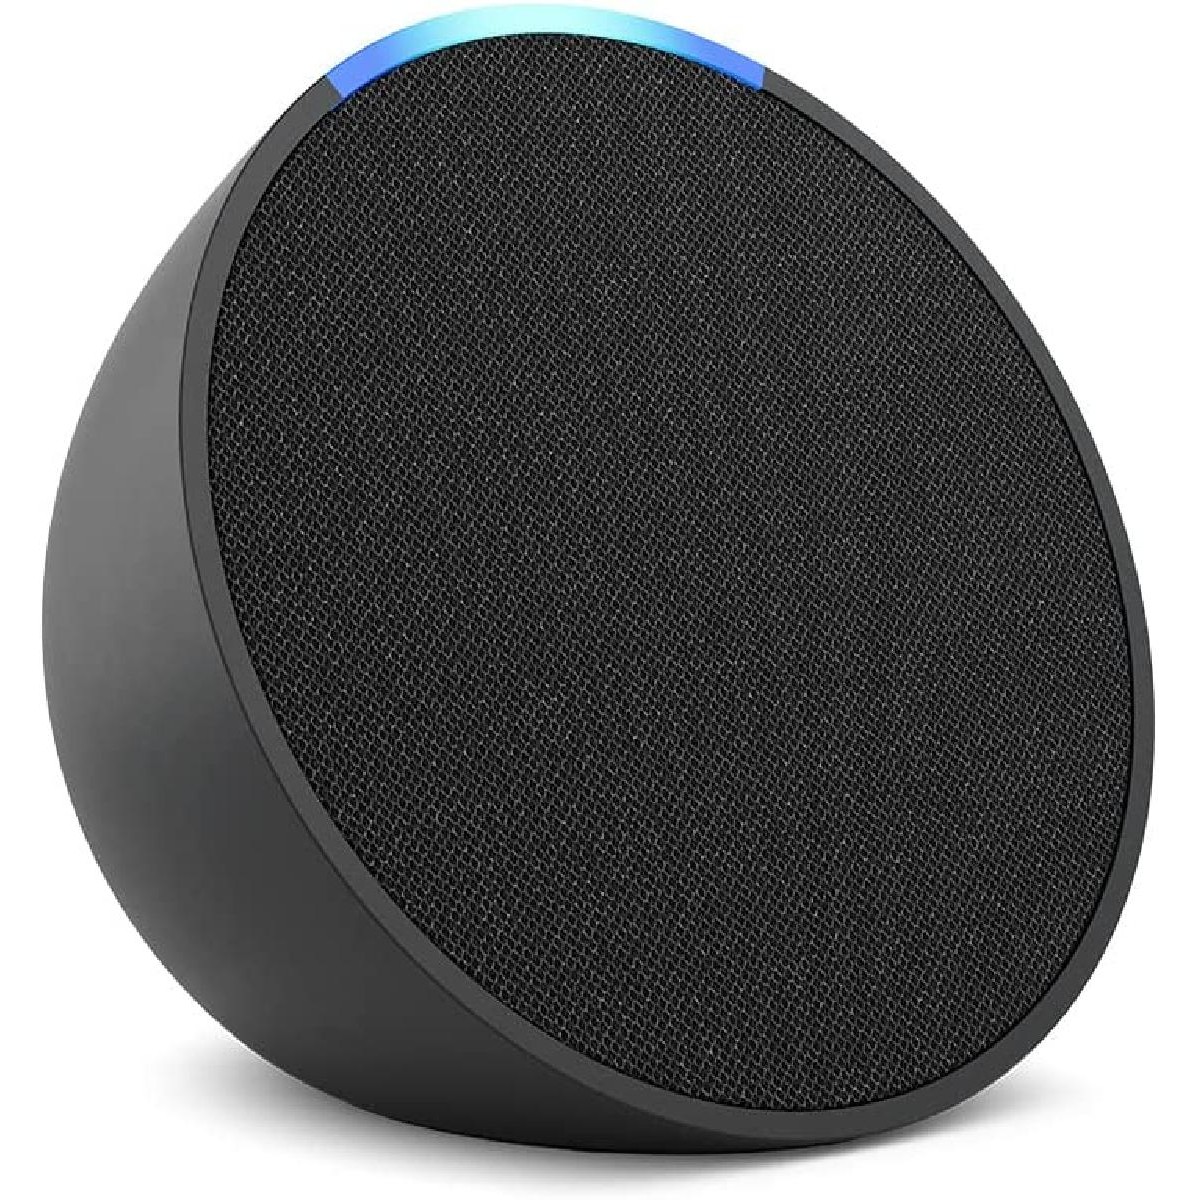 Amazon Echo Pop 1st generation smart speaker black (B09WX9XBKD)